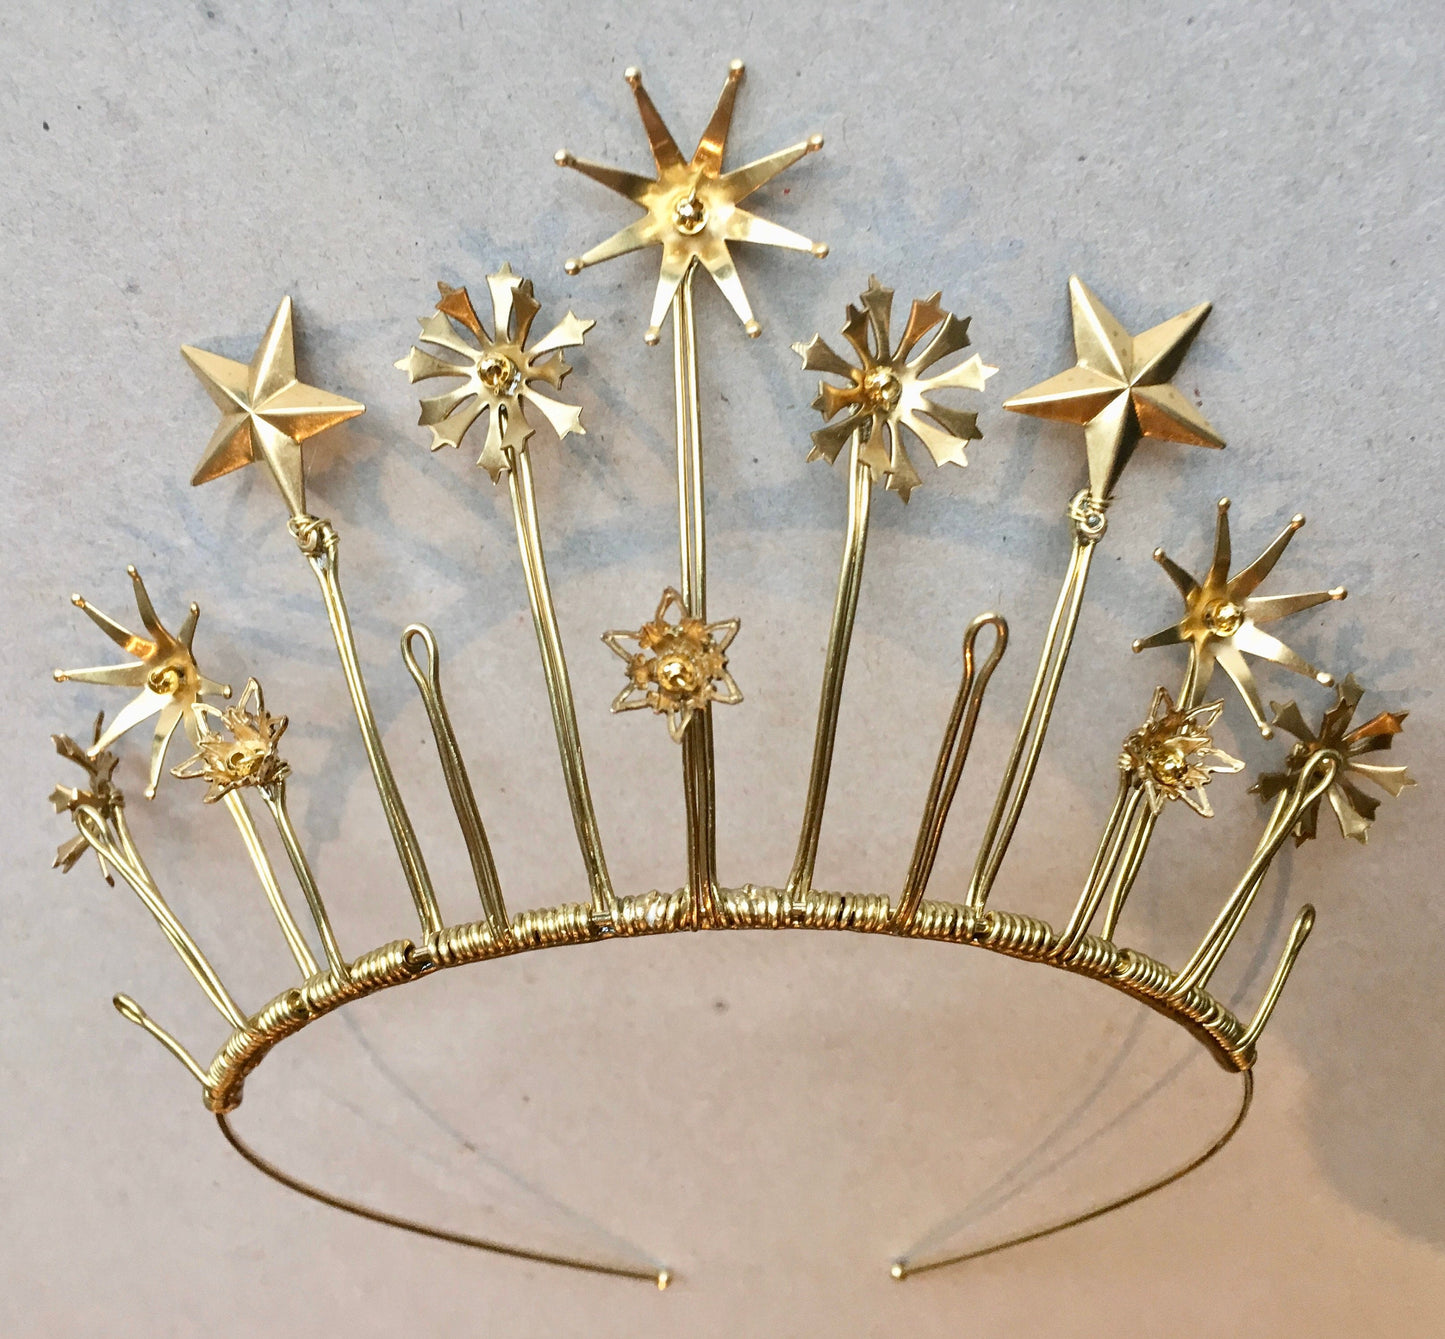 The EMPRESS Tarot Star Crown